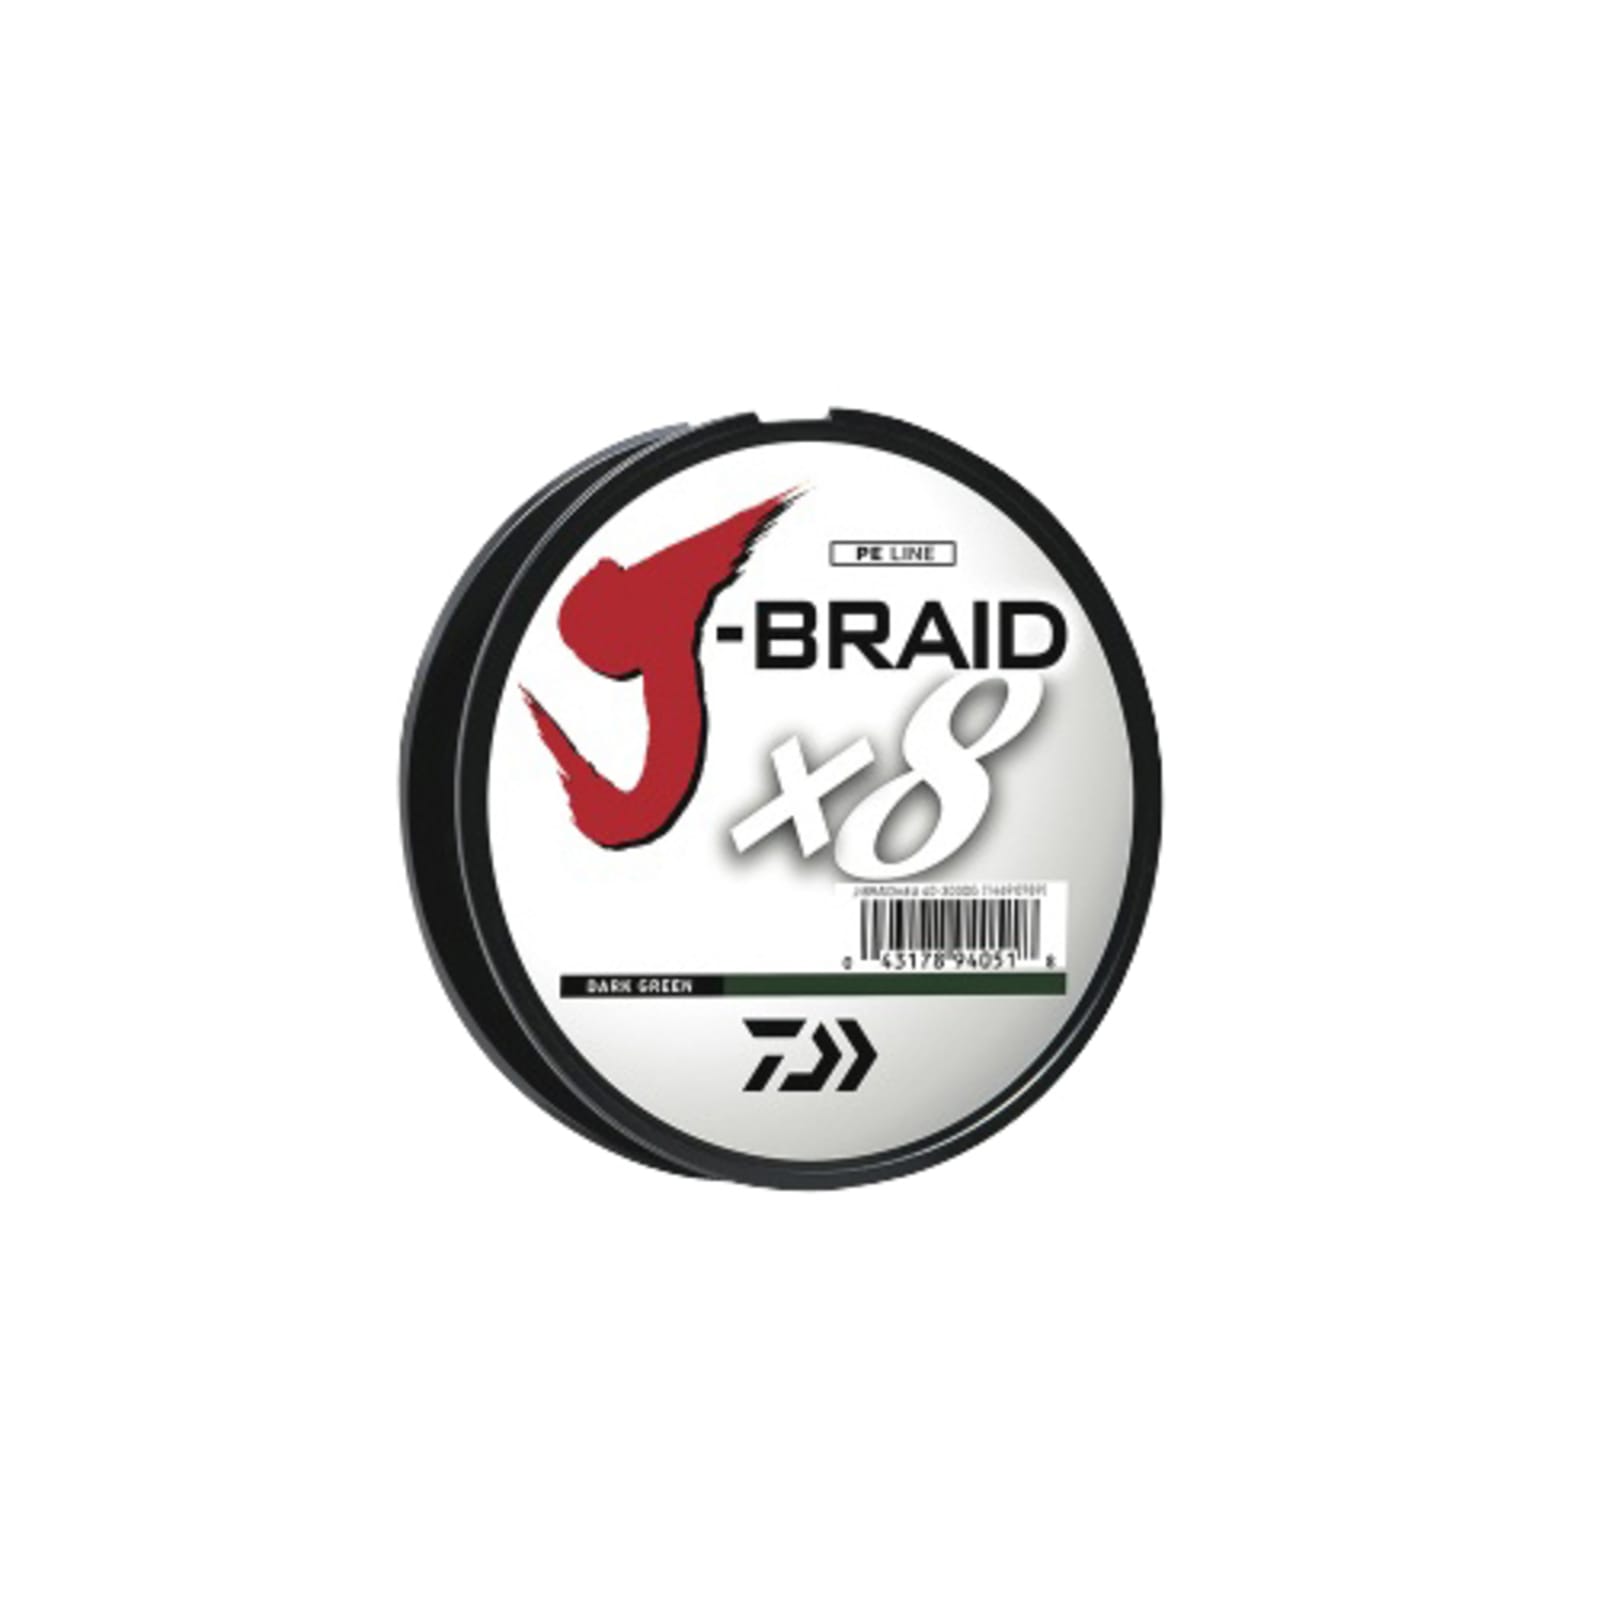 J-Braid Braided Fishing Line - Dark Green